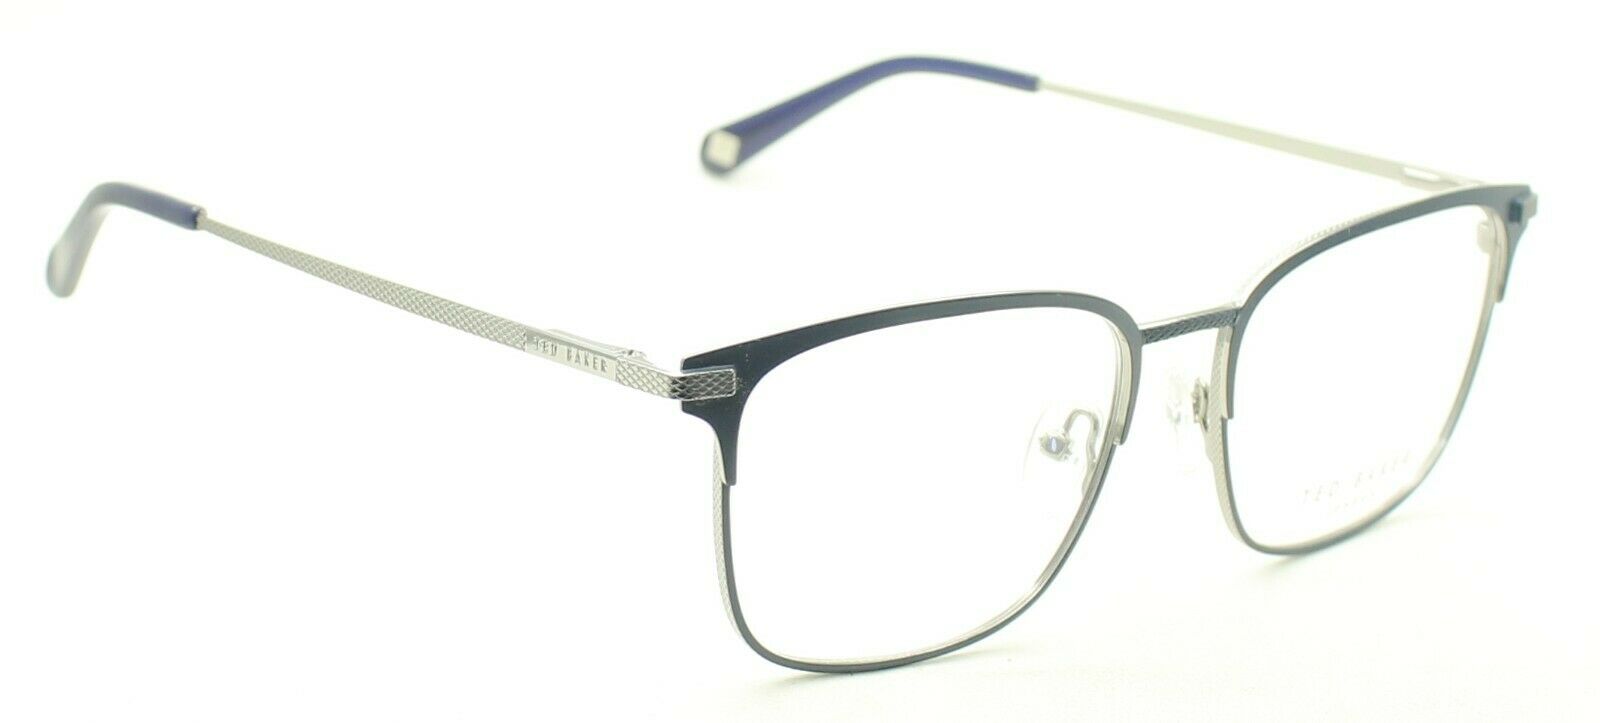 TED BAKER 4259 503 54mm Daley Eyewear FRAMES Glasses Eyeglasses RX Optical - New